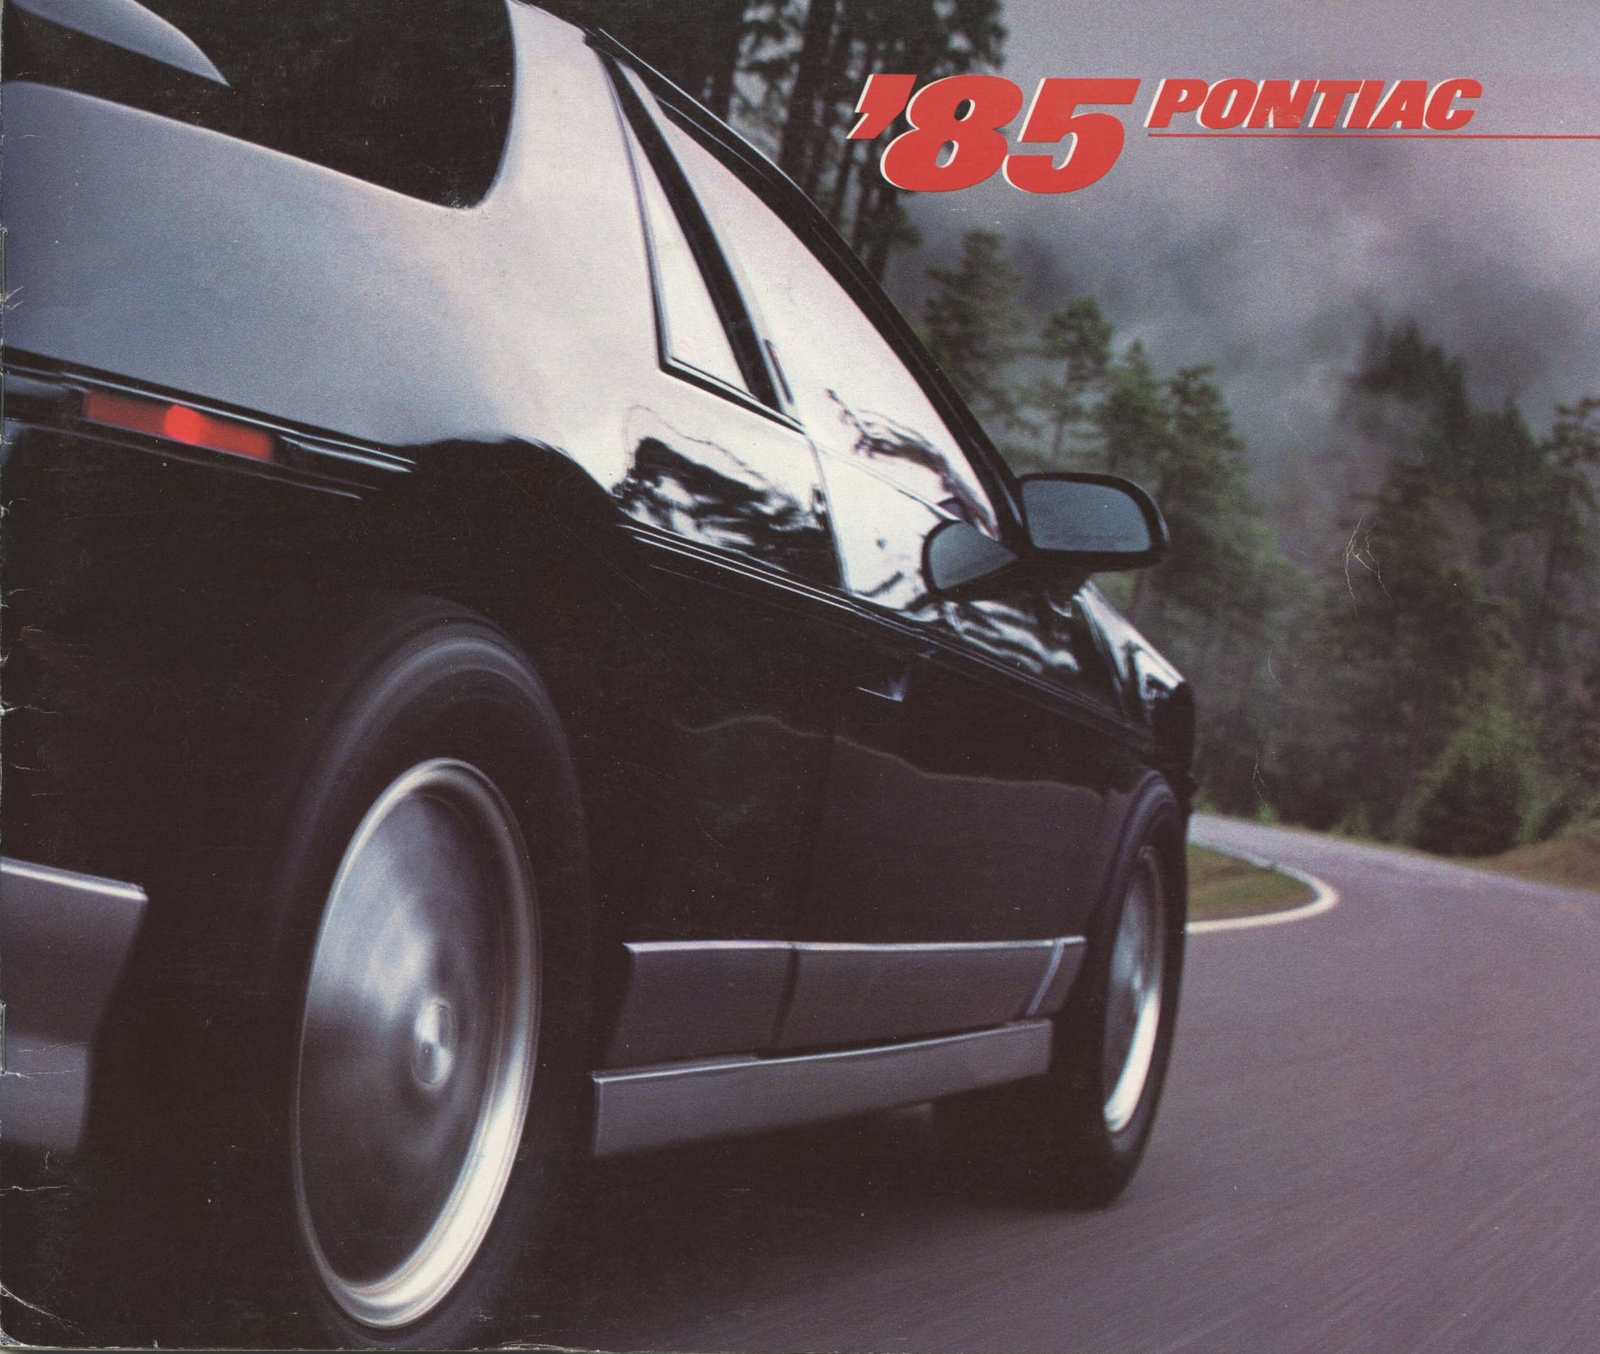 n_1985 Pontiac Full Line Prestige-00.jpg